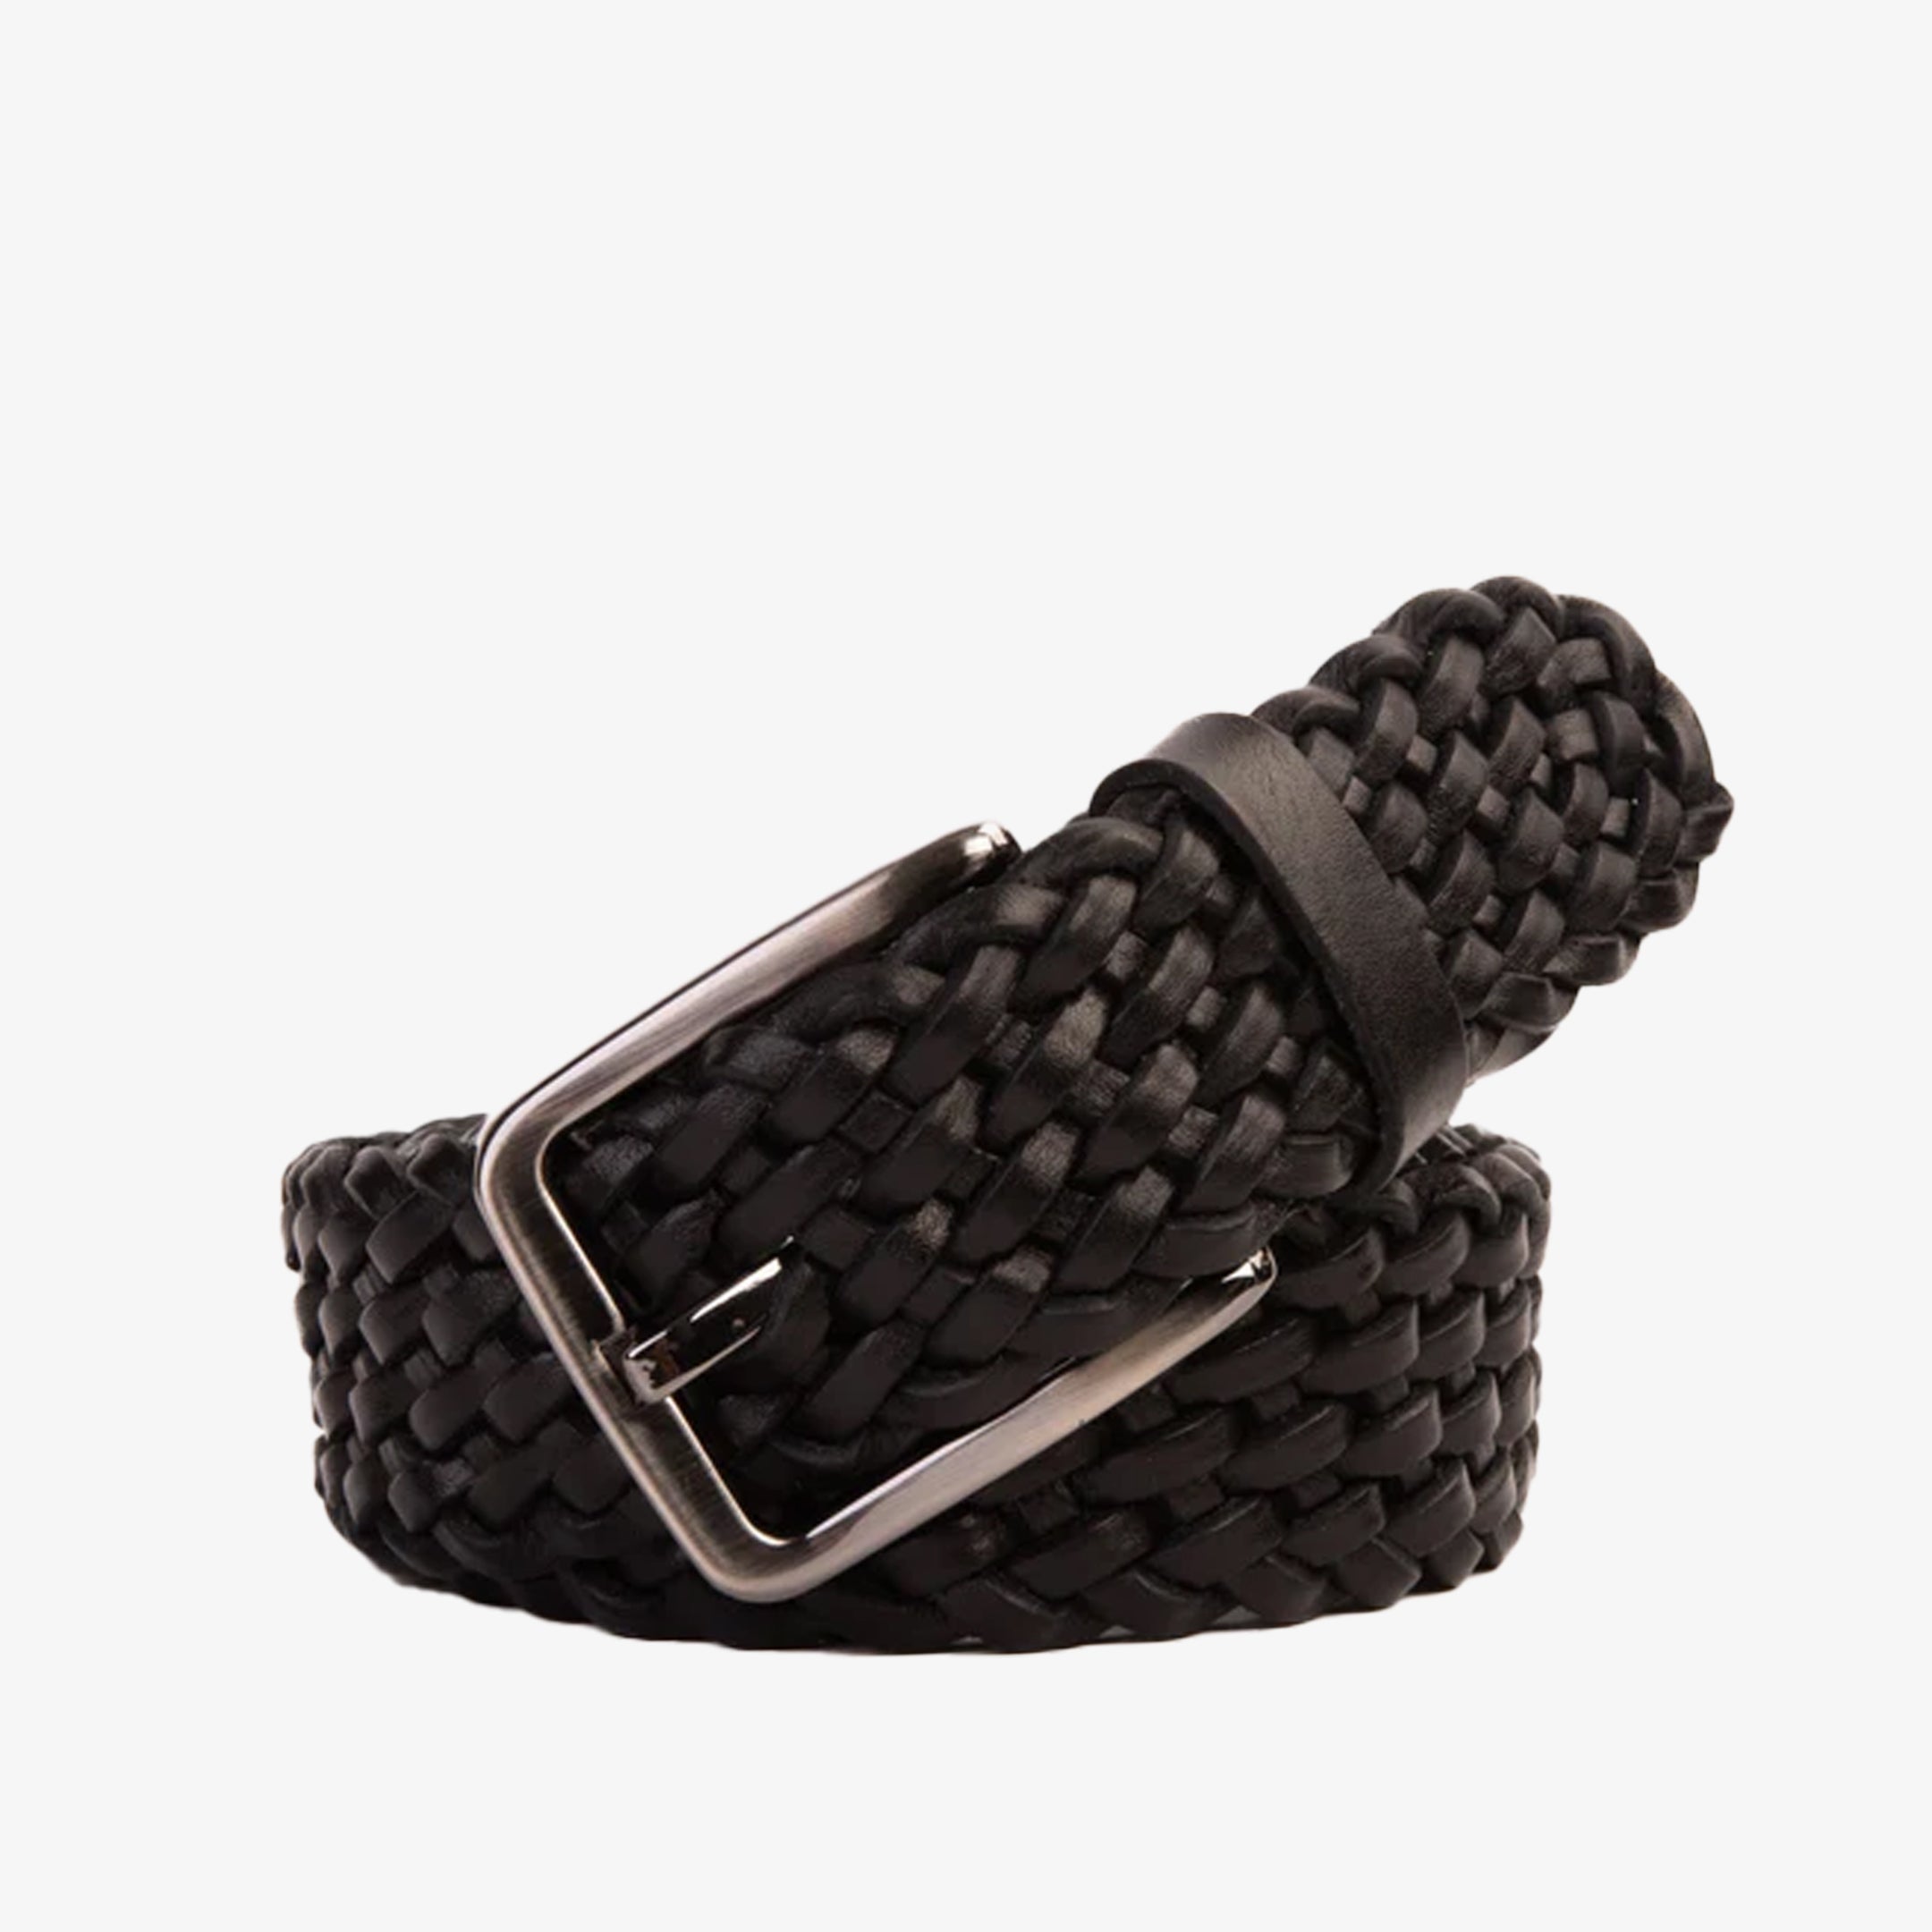 The Mclean Woven Black Color Leather Belt